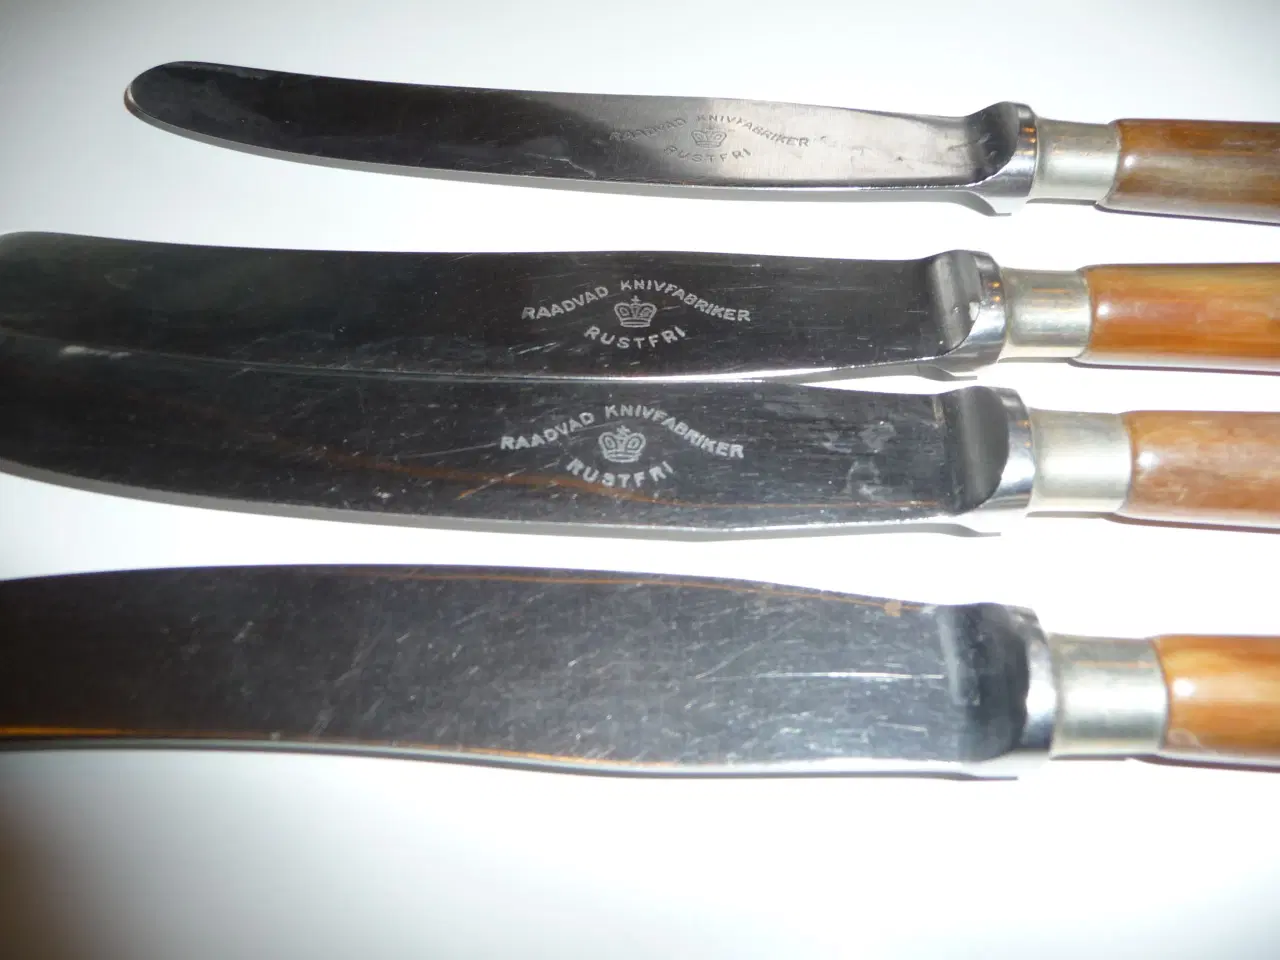 Billede 2 - 4 smøreknive fra Raadvad